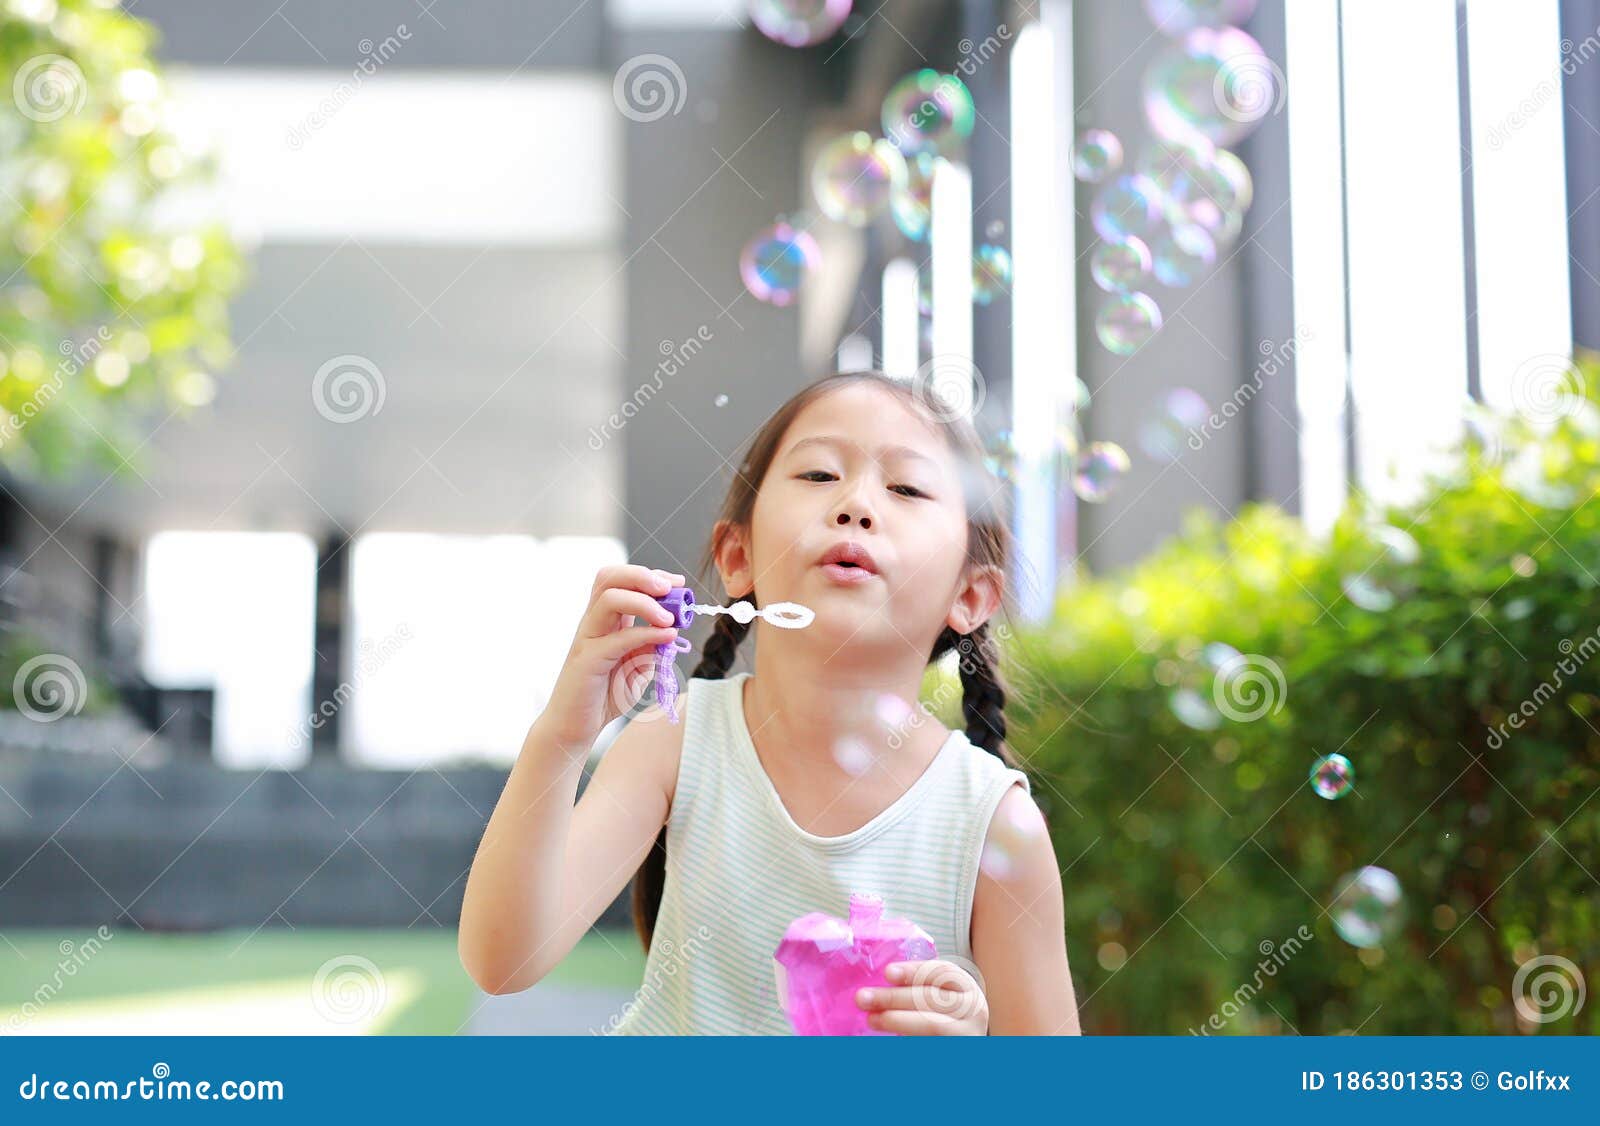 outdoor wanking bubble Asian